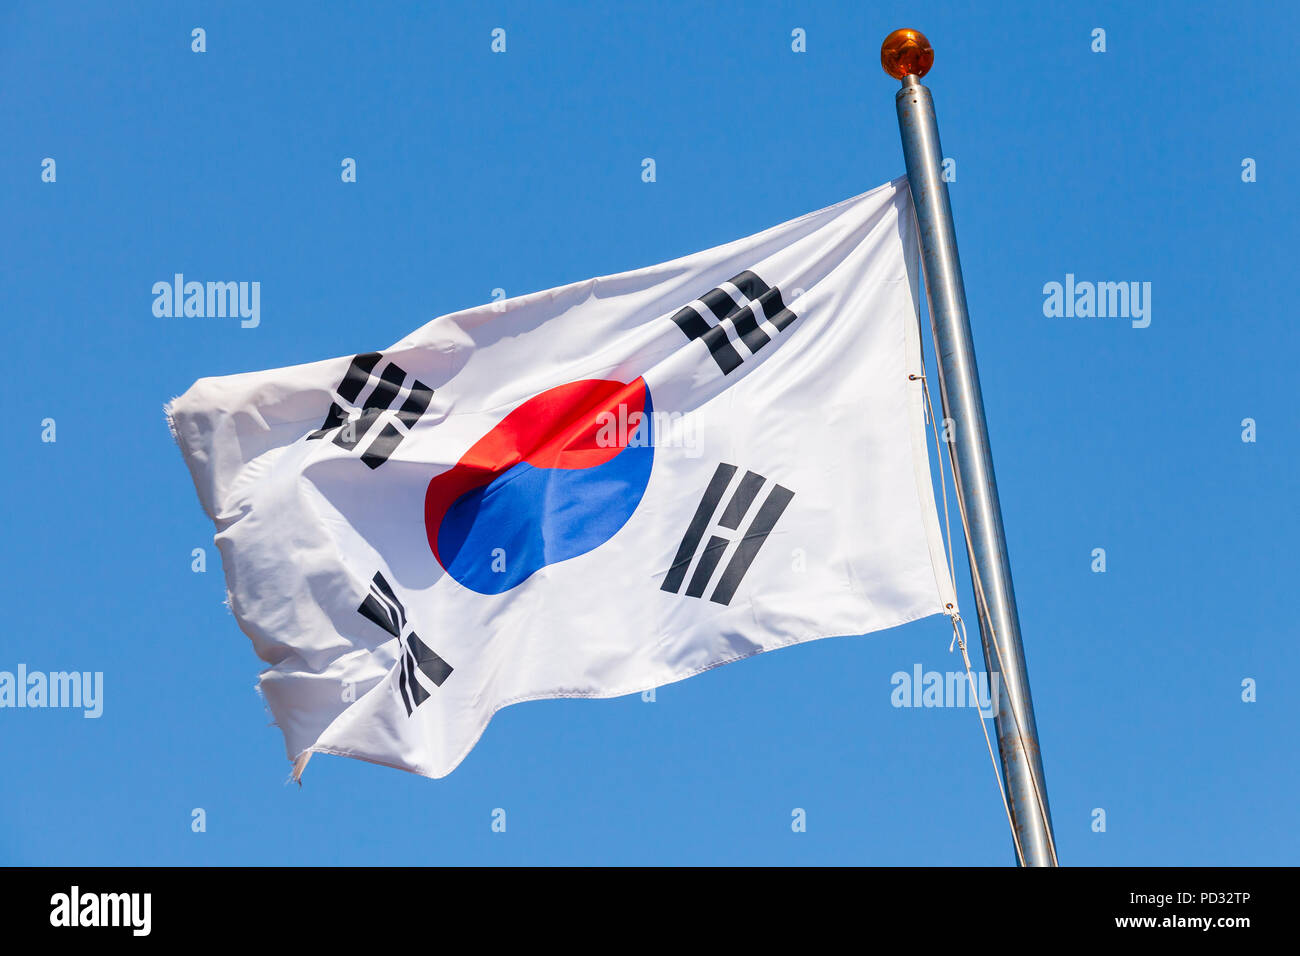 South Korea flag, also known as the Taegukgi waving on a flagpole Stock Photo